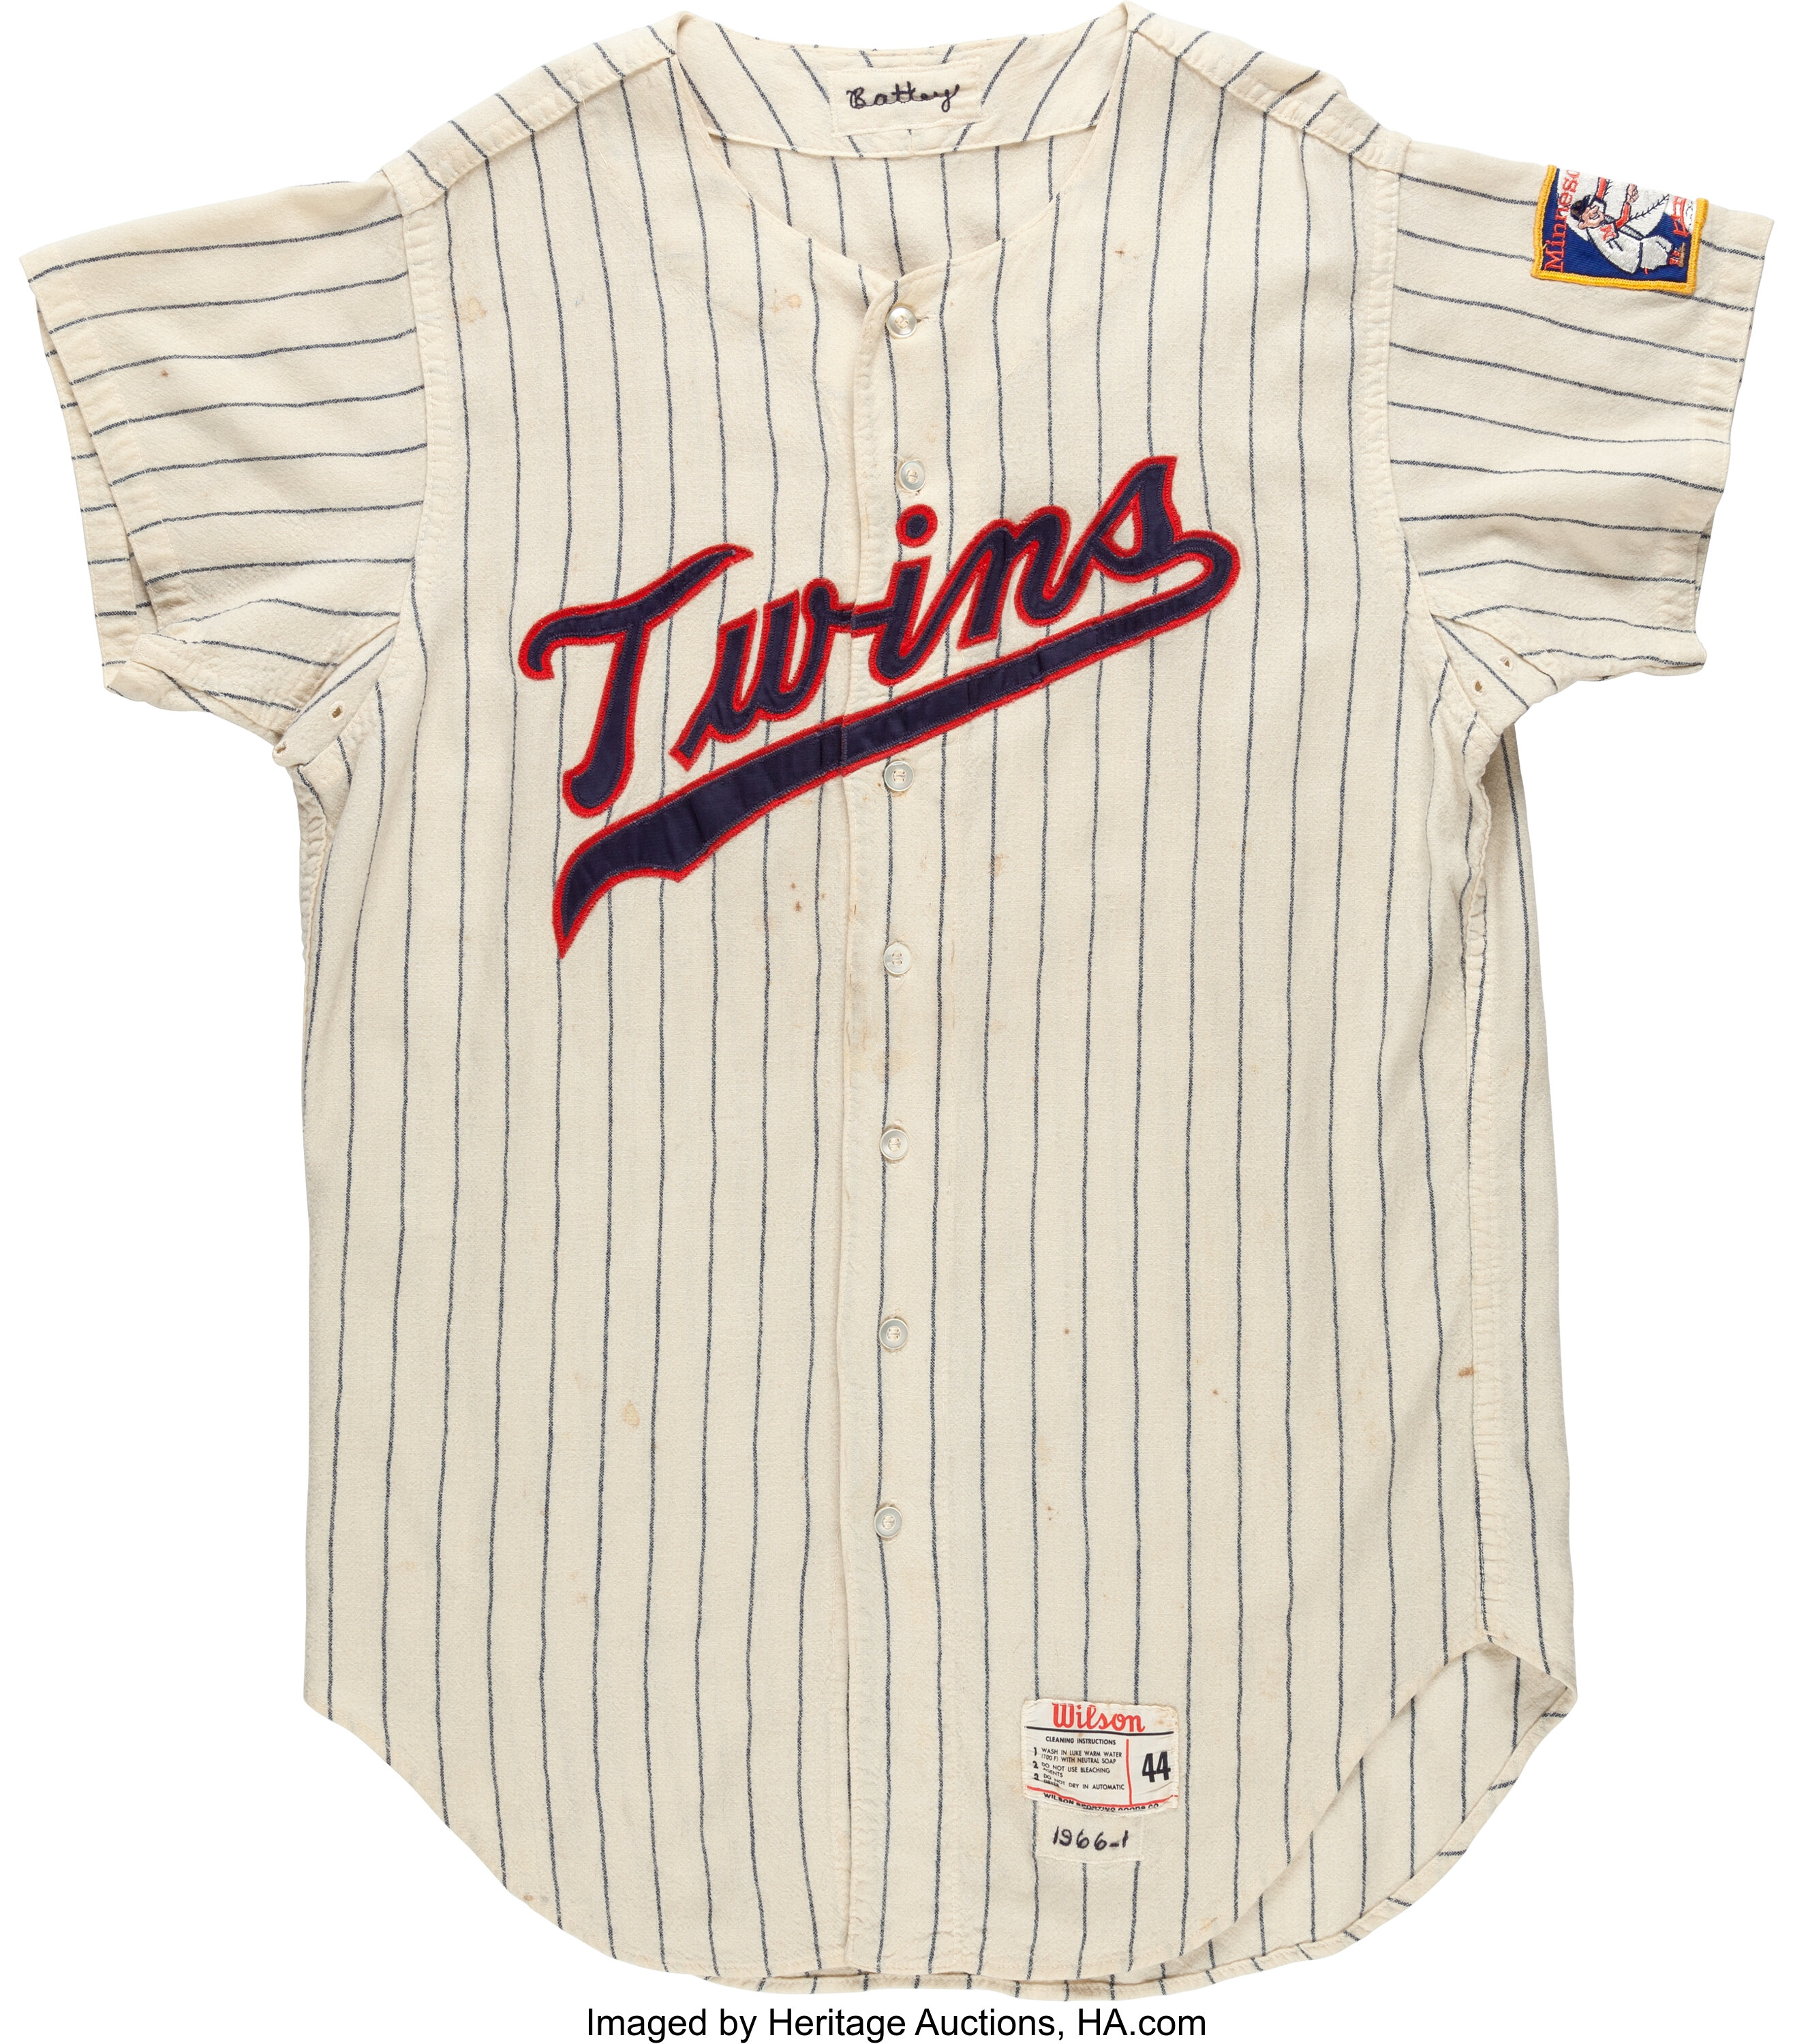 Minnesota Twins Game Used MLB Jerseys for sale